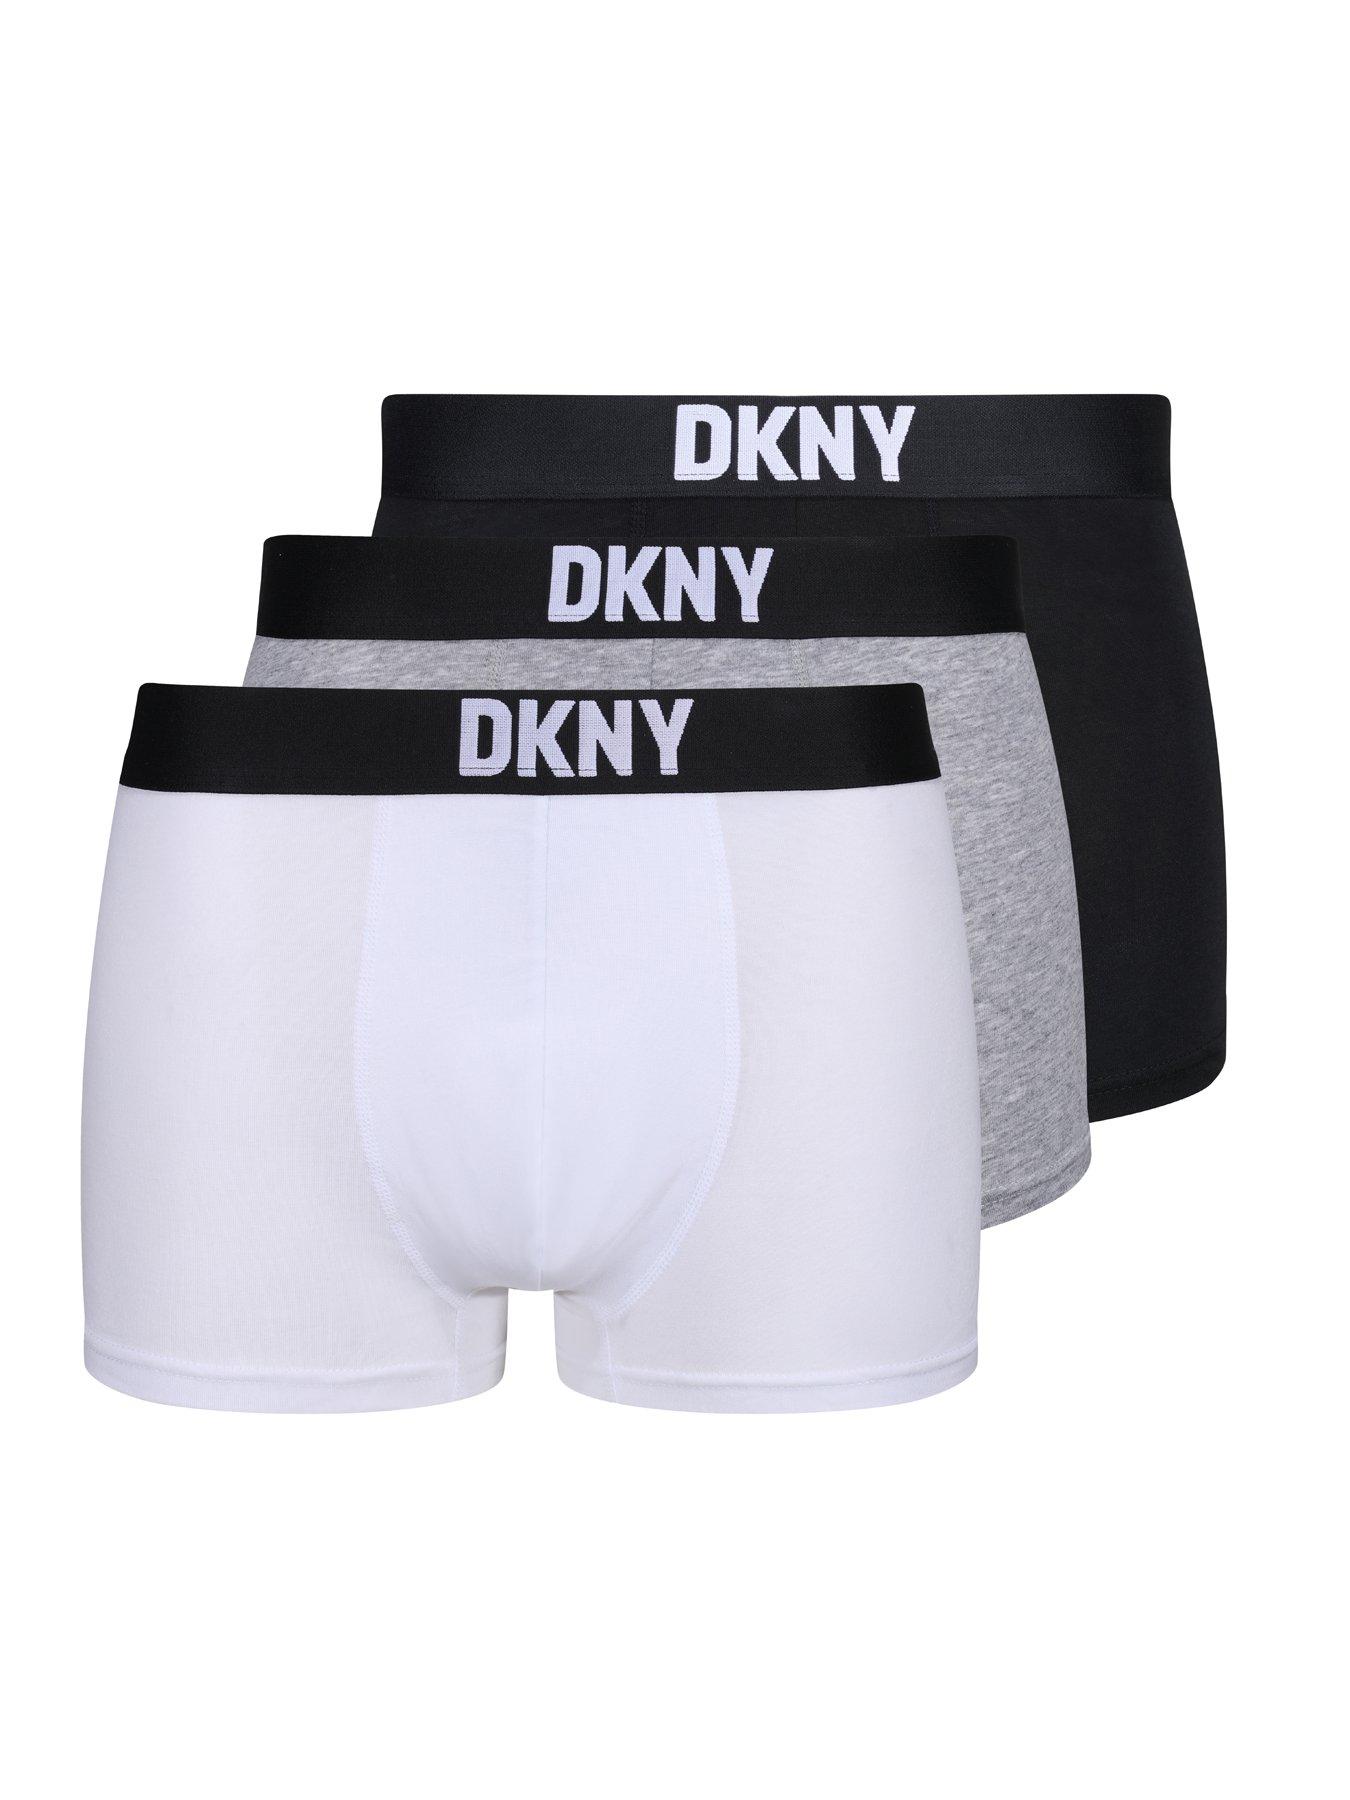 DKNY 5 pack boxers in multi